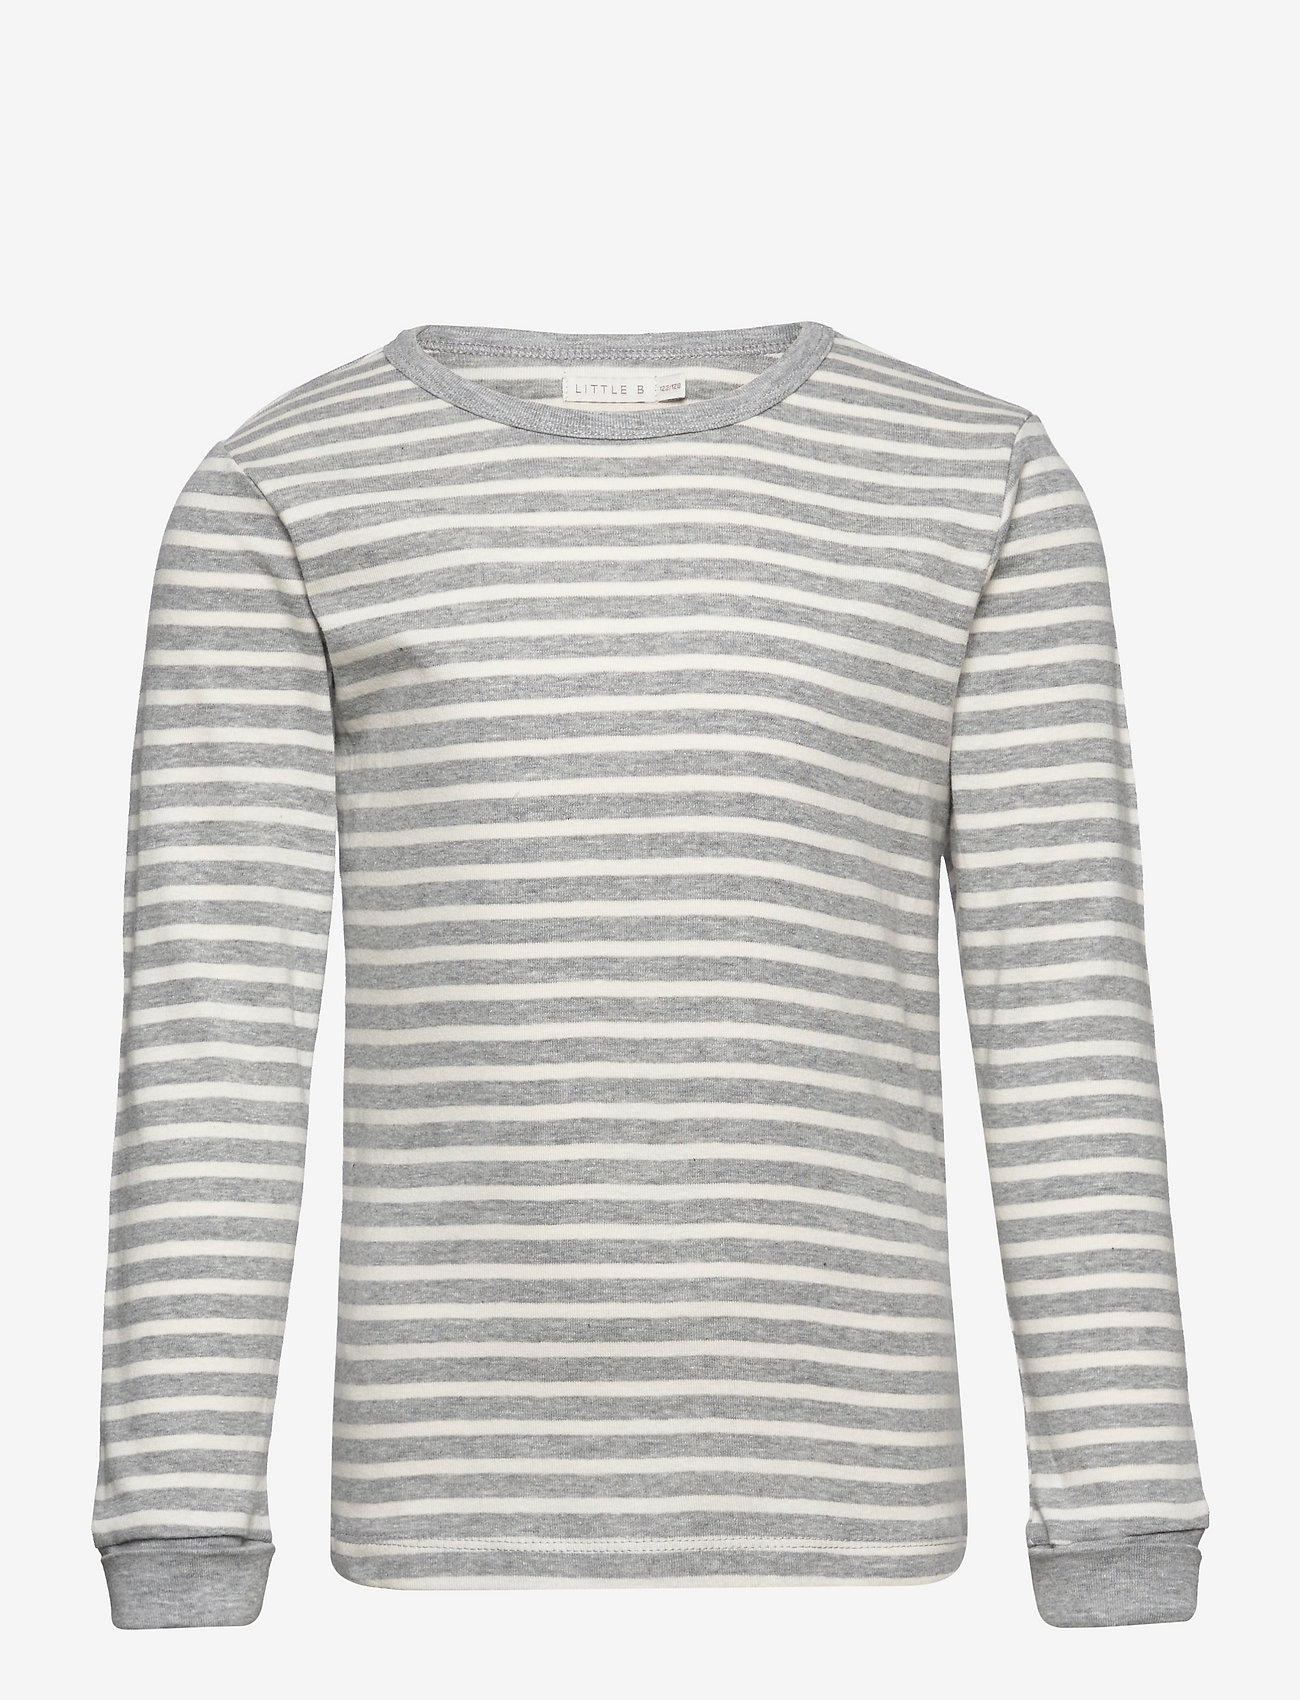 Little B - T-shirt long sleeve cotton - marškinėliai ilgomis rankovėmis - light grey stripe - 1